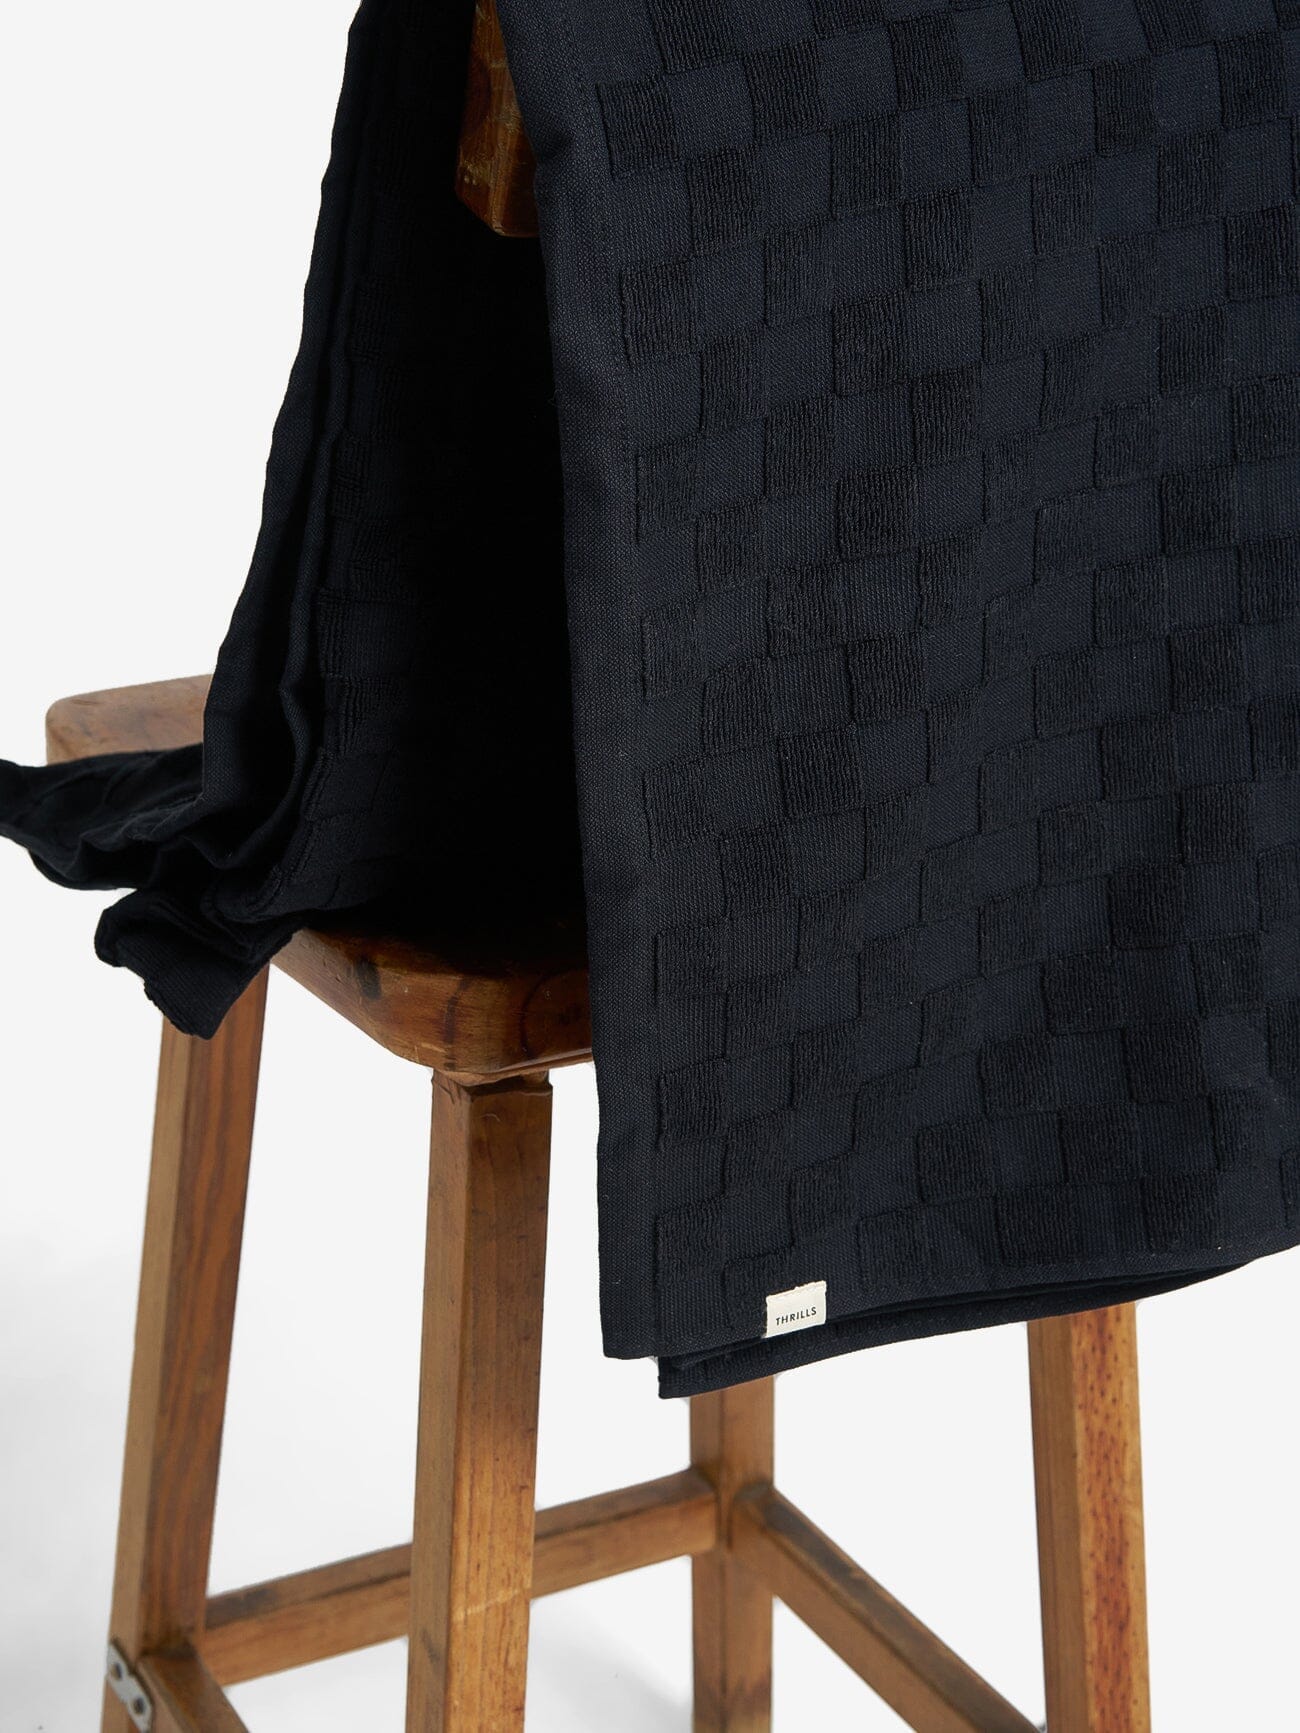 Aalto Terry Towel - Black